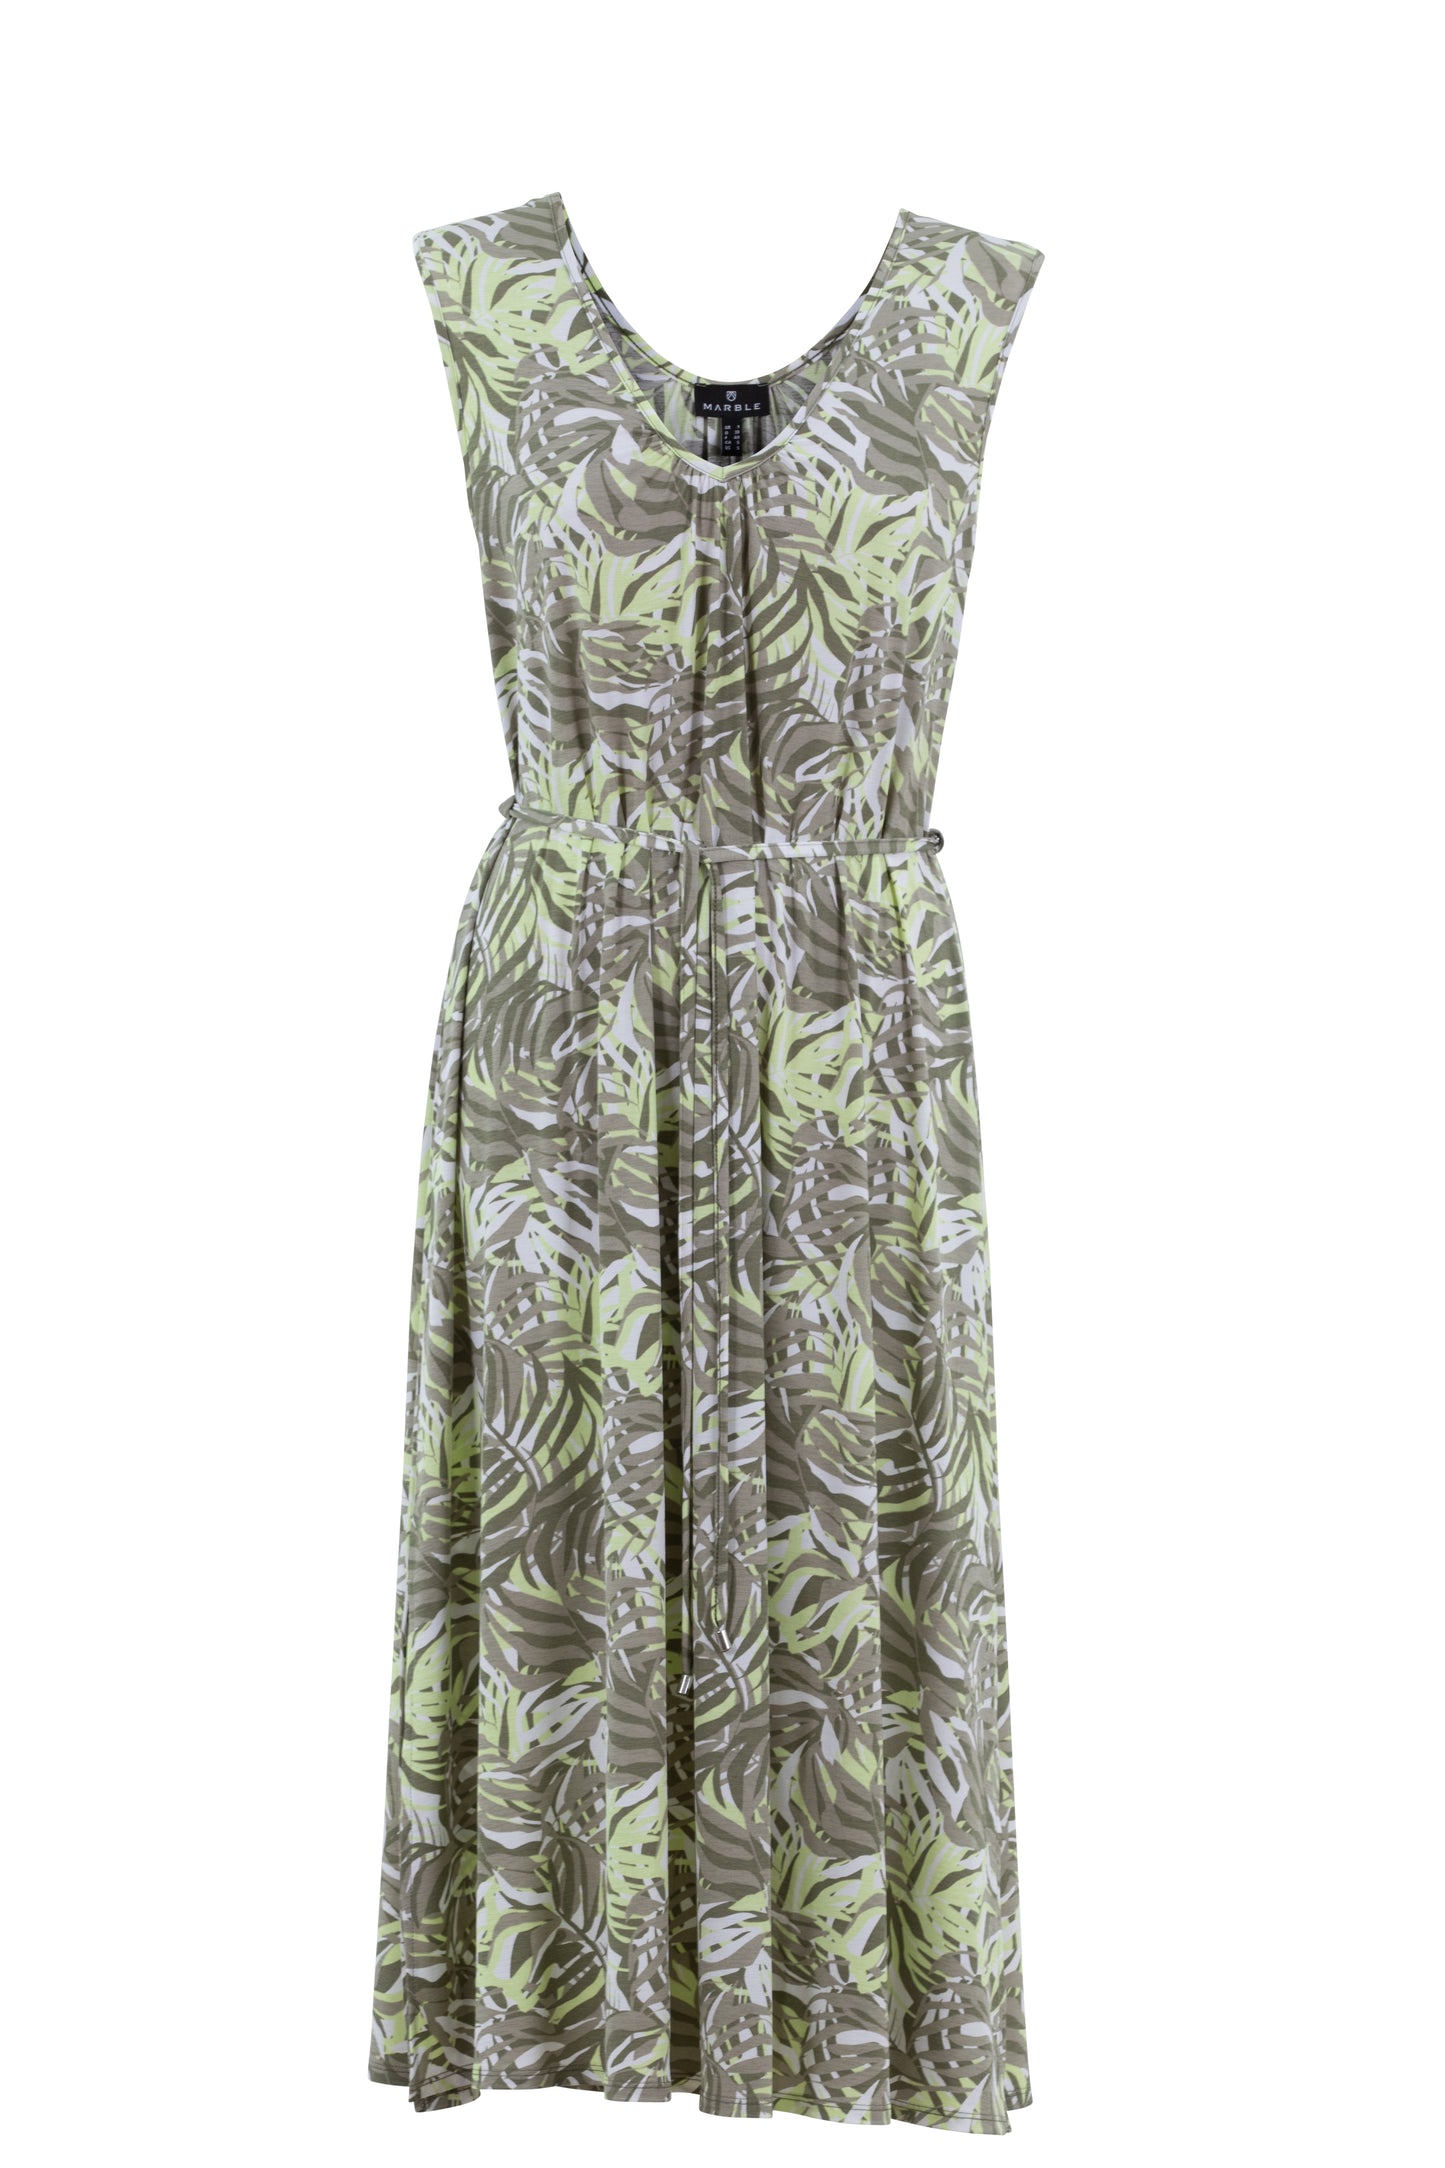 Midi-Dress in Olive Leaf Print